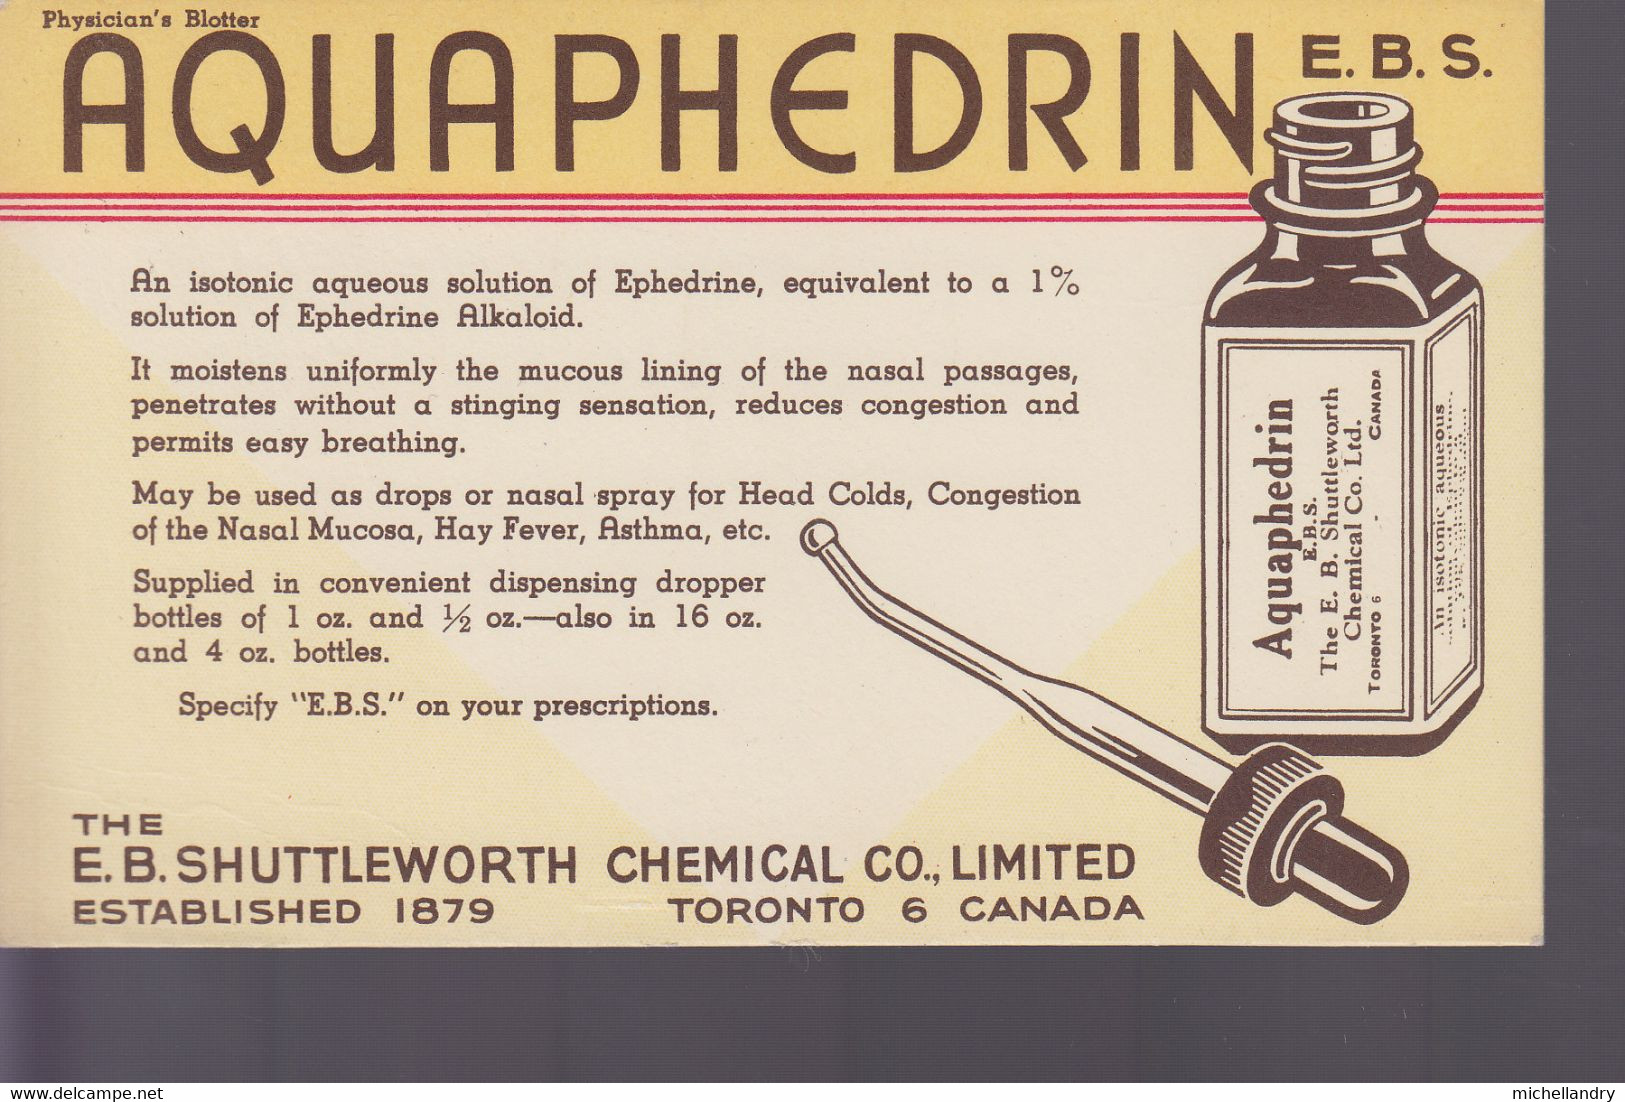 Pub (115915) Aquaphedrin E.B.S. The E.B.Shuttleworth Chemical Co Limited, Established 1879 Toronto 6 Canada - Plaques En Carton